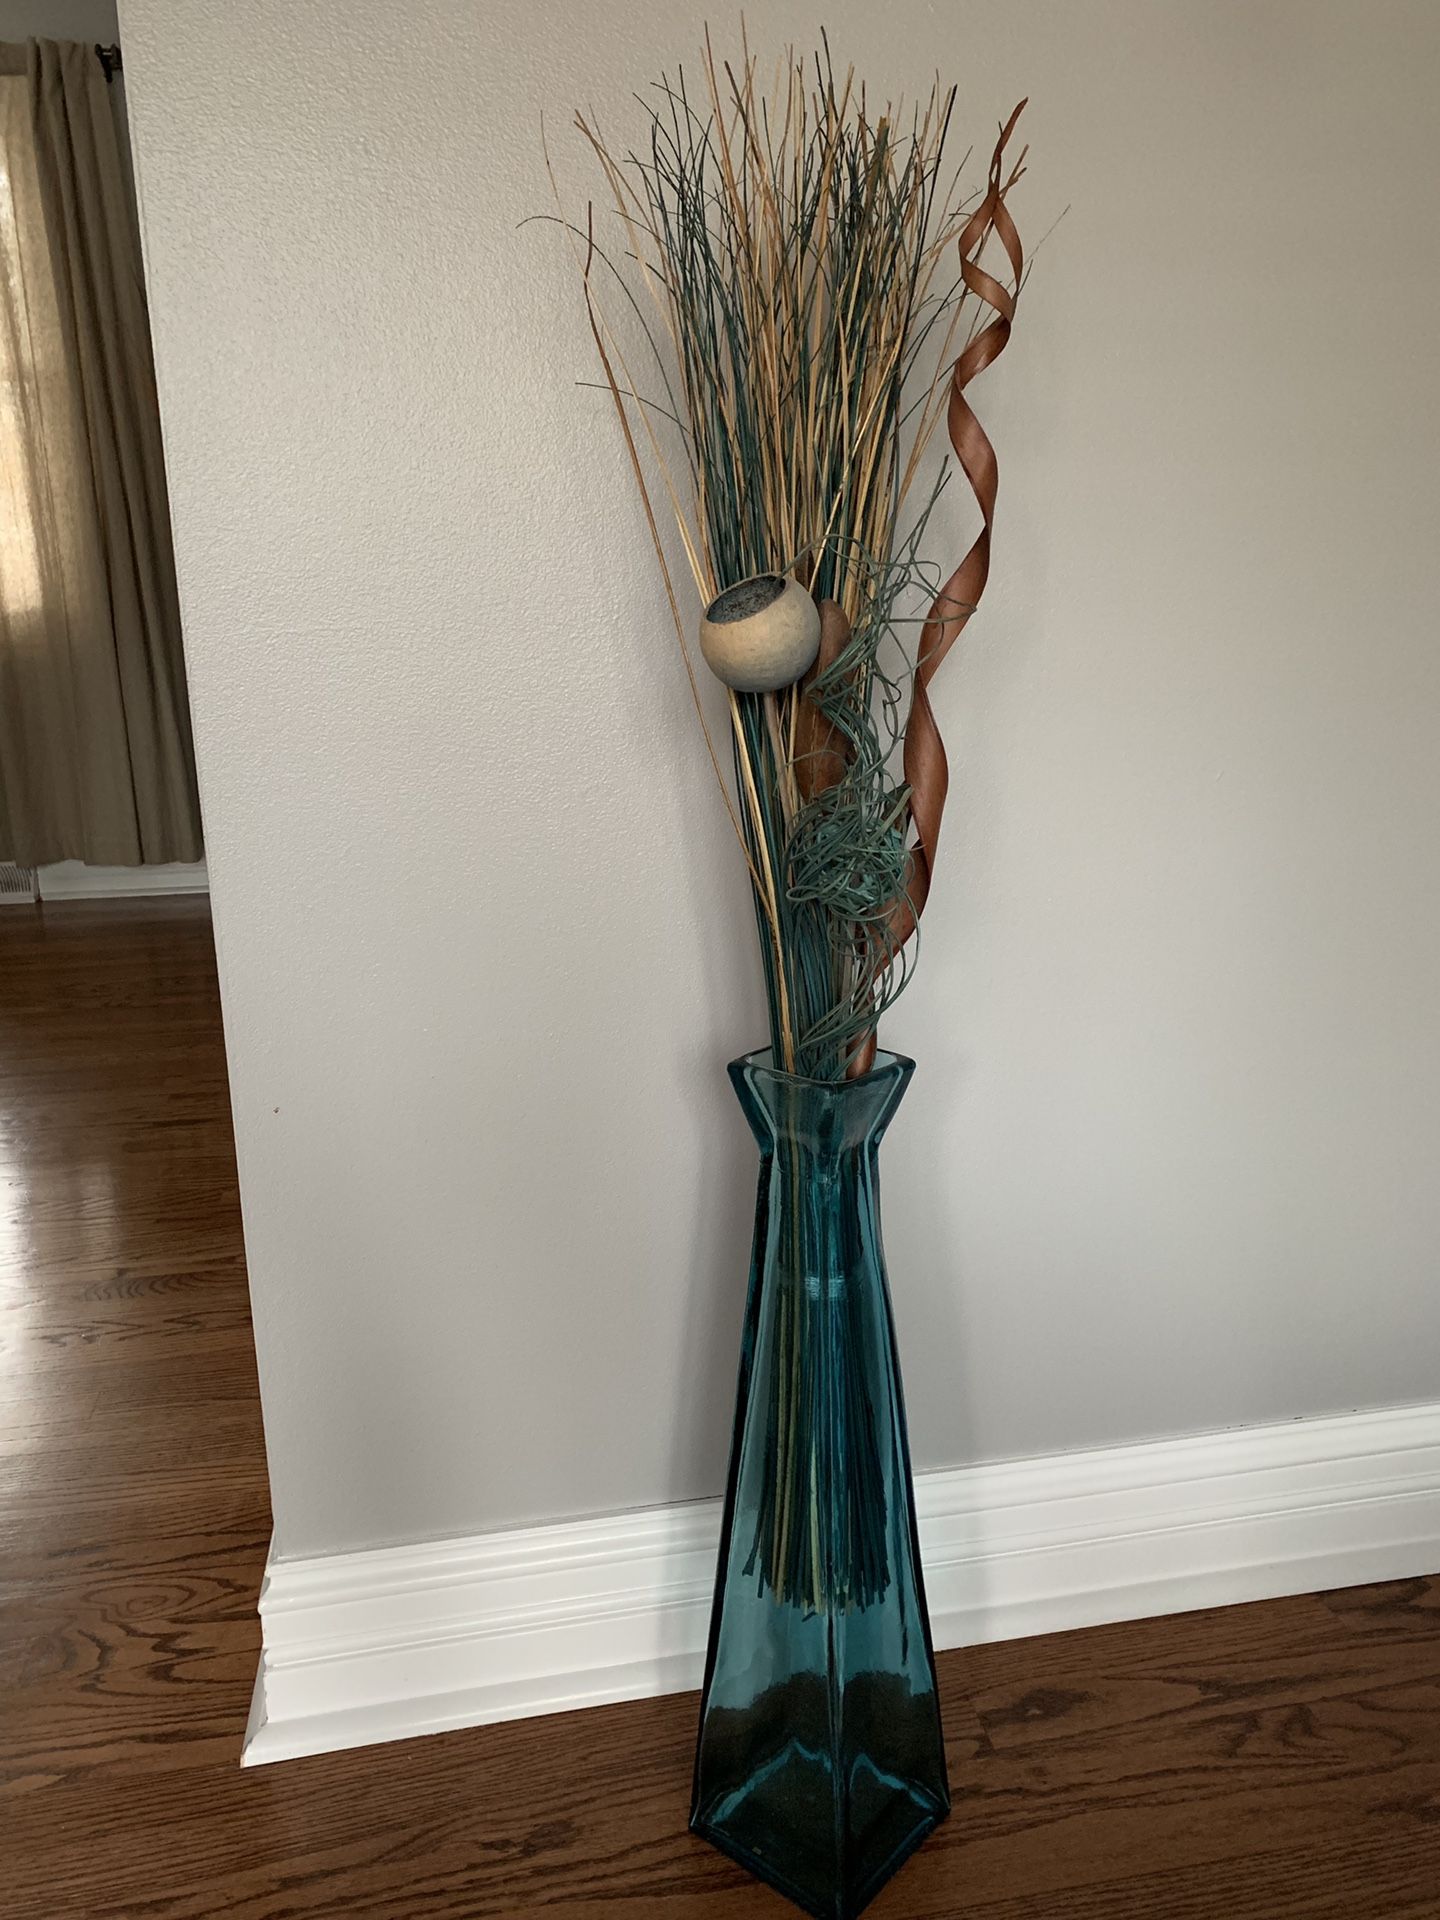 Floor vase with flowers